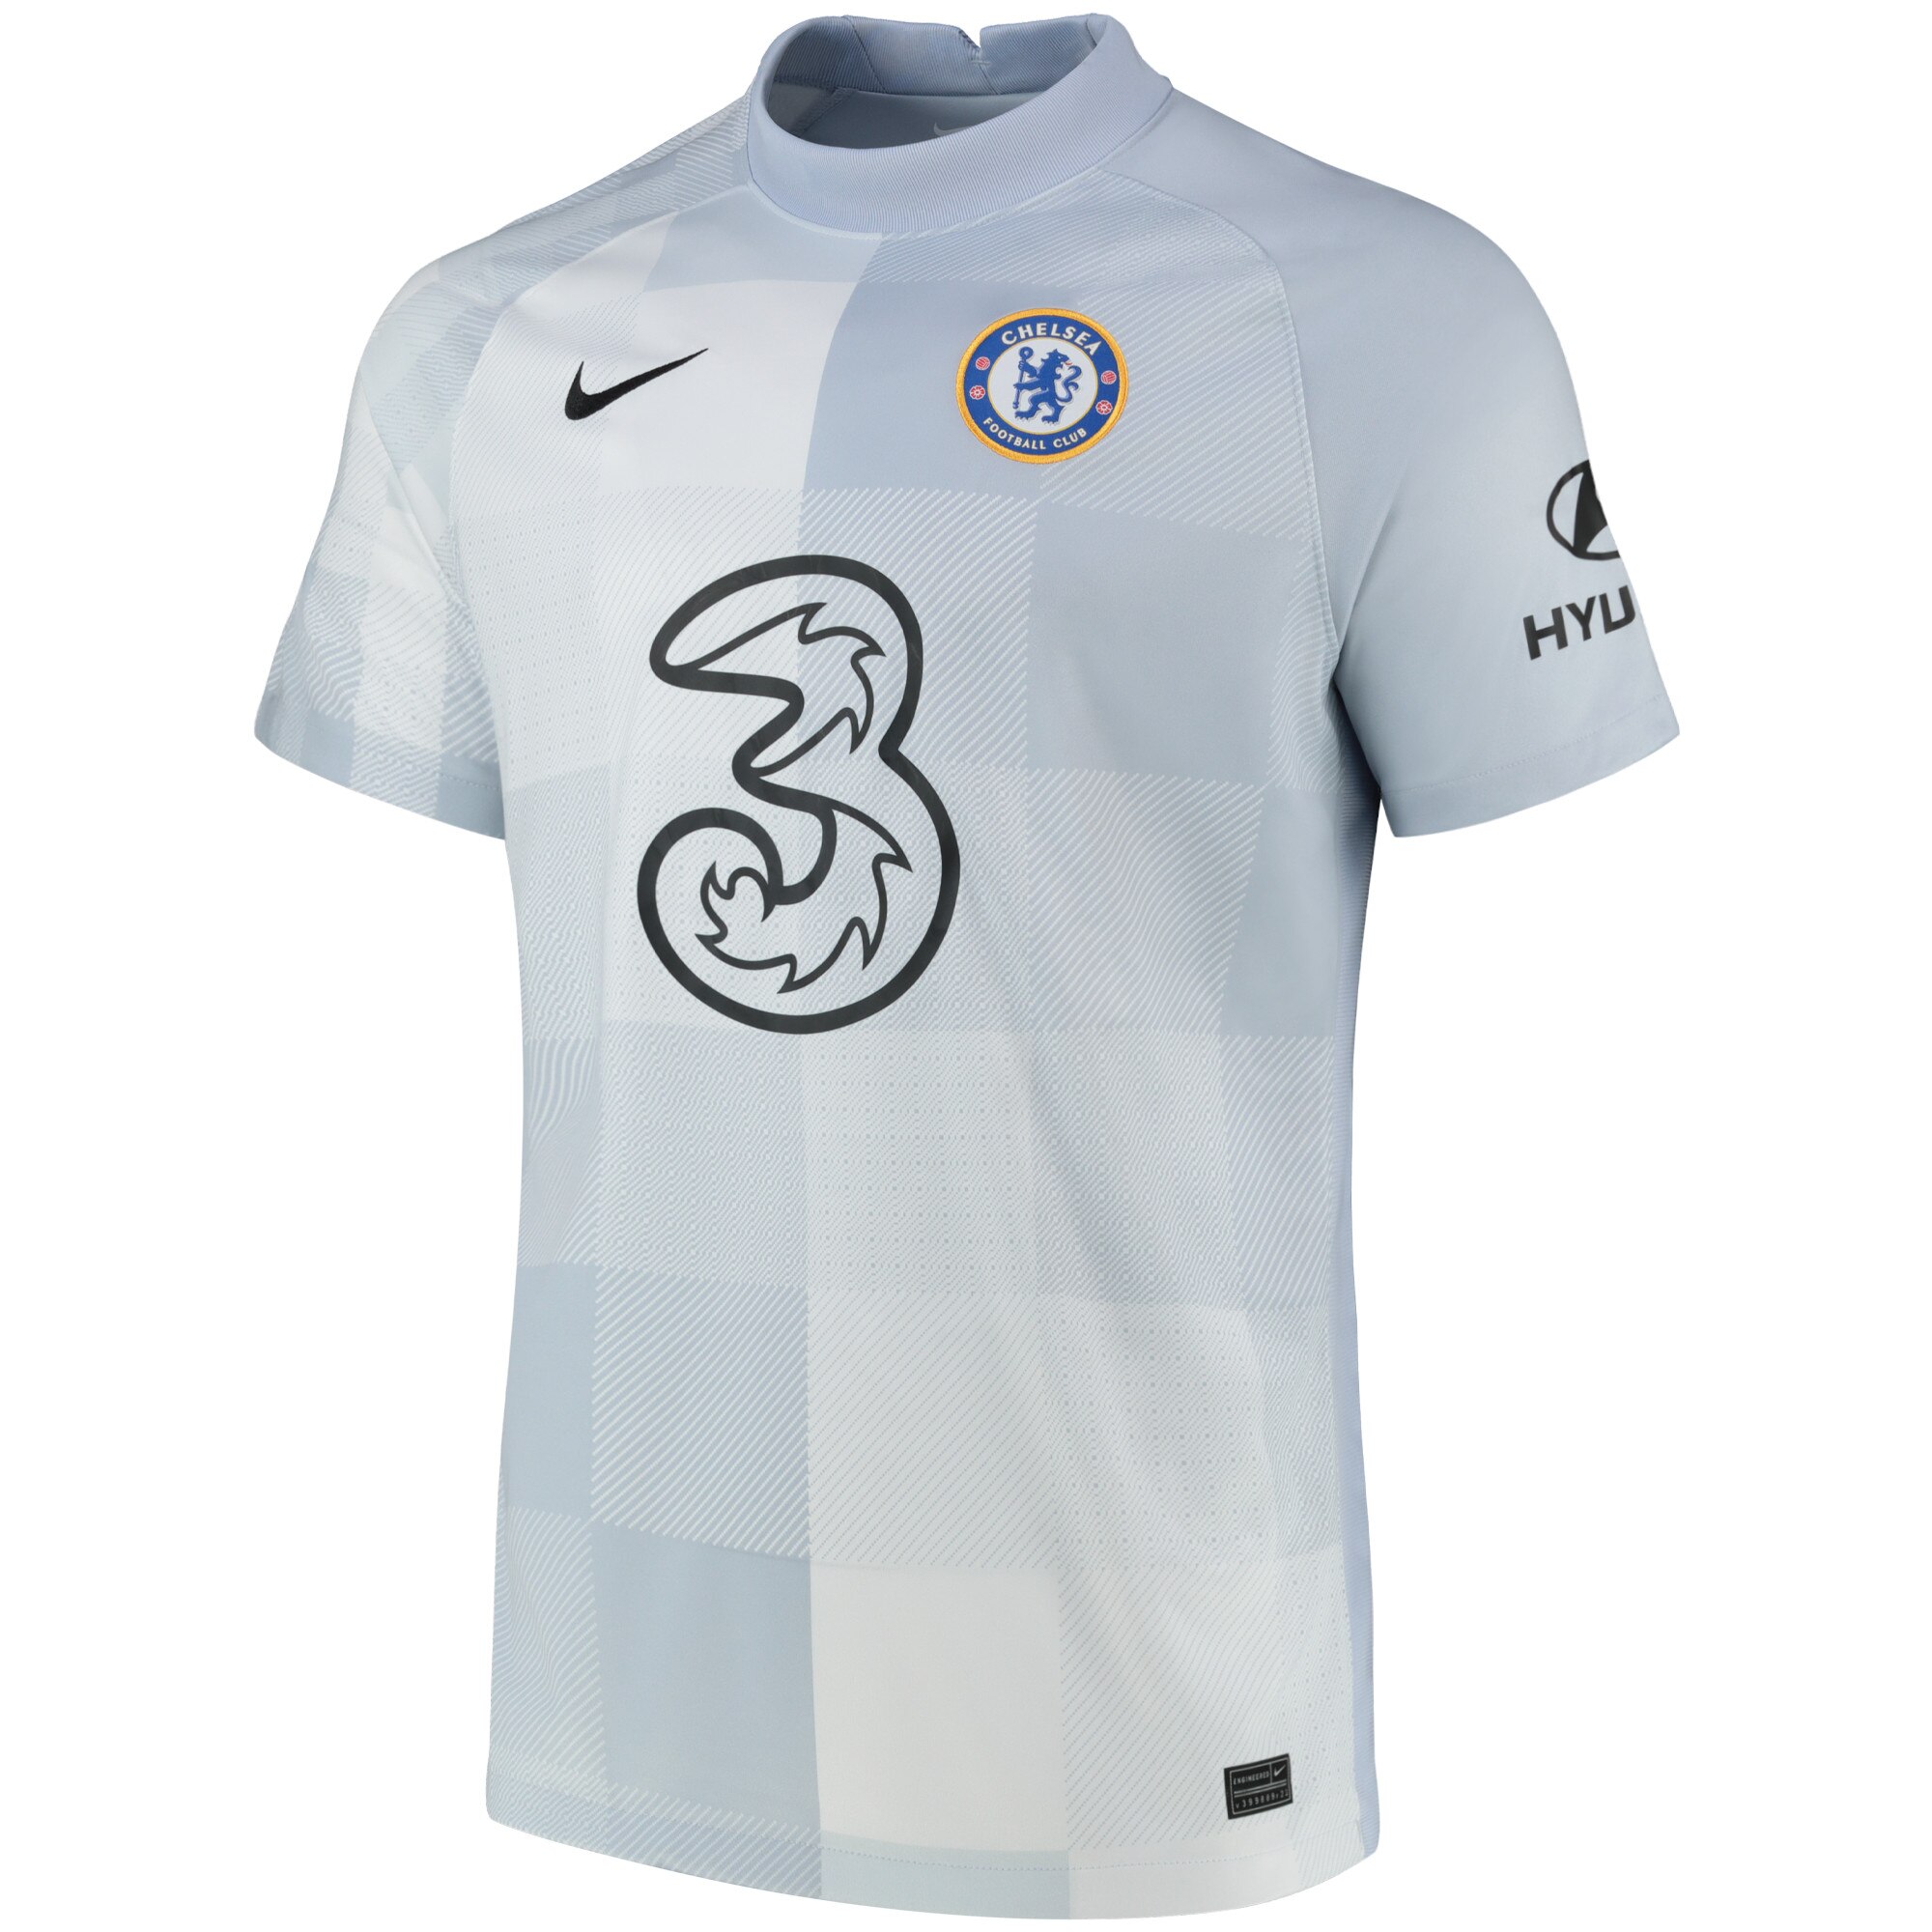 Chelsea Goalkeeper Stadium Shirt 2021-22 with Bergstrom 36 printing